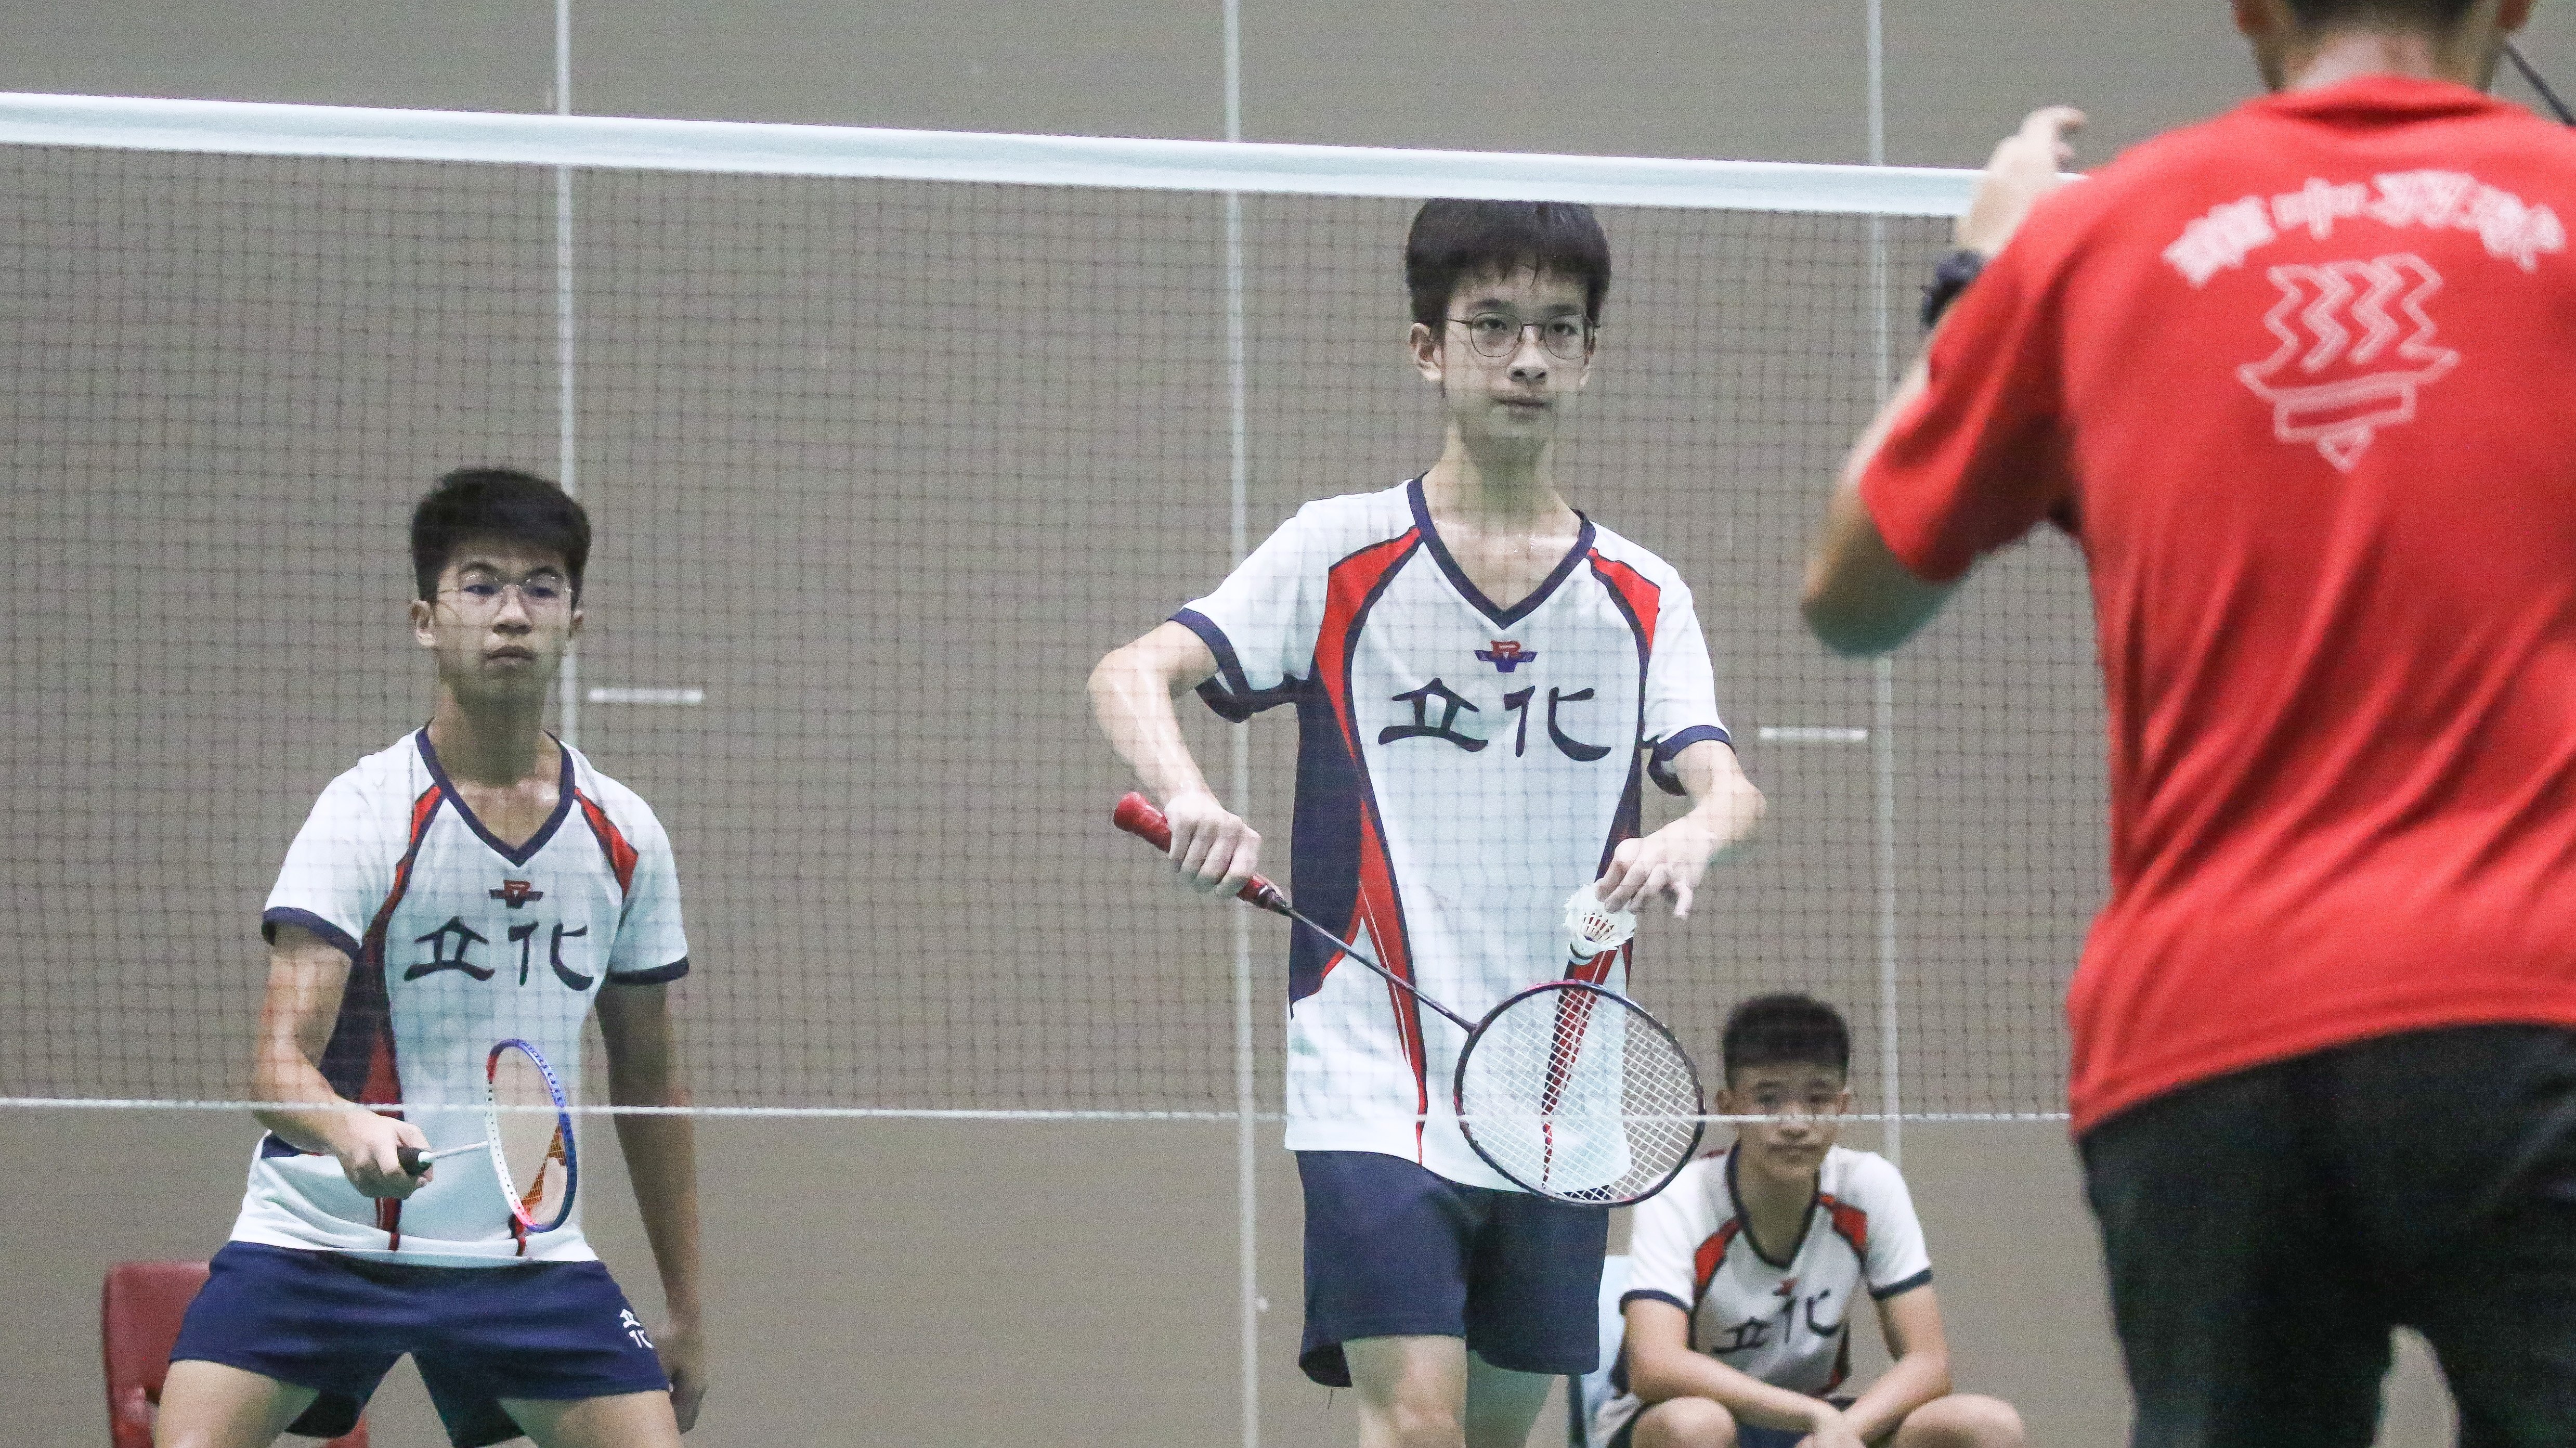 2023-05-17_Badminton_By Chin KK_IFP_2028_edited